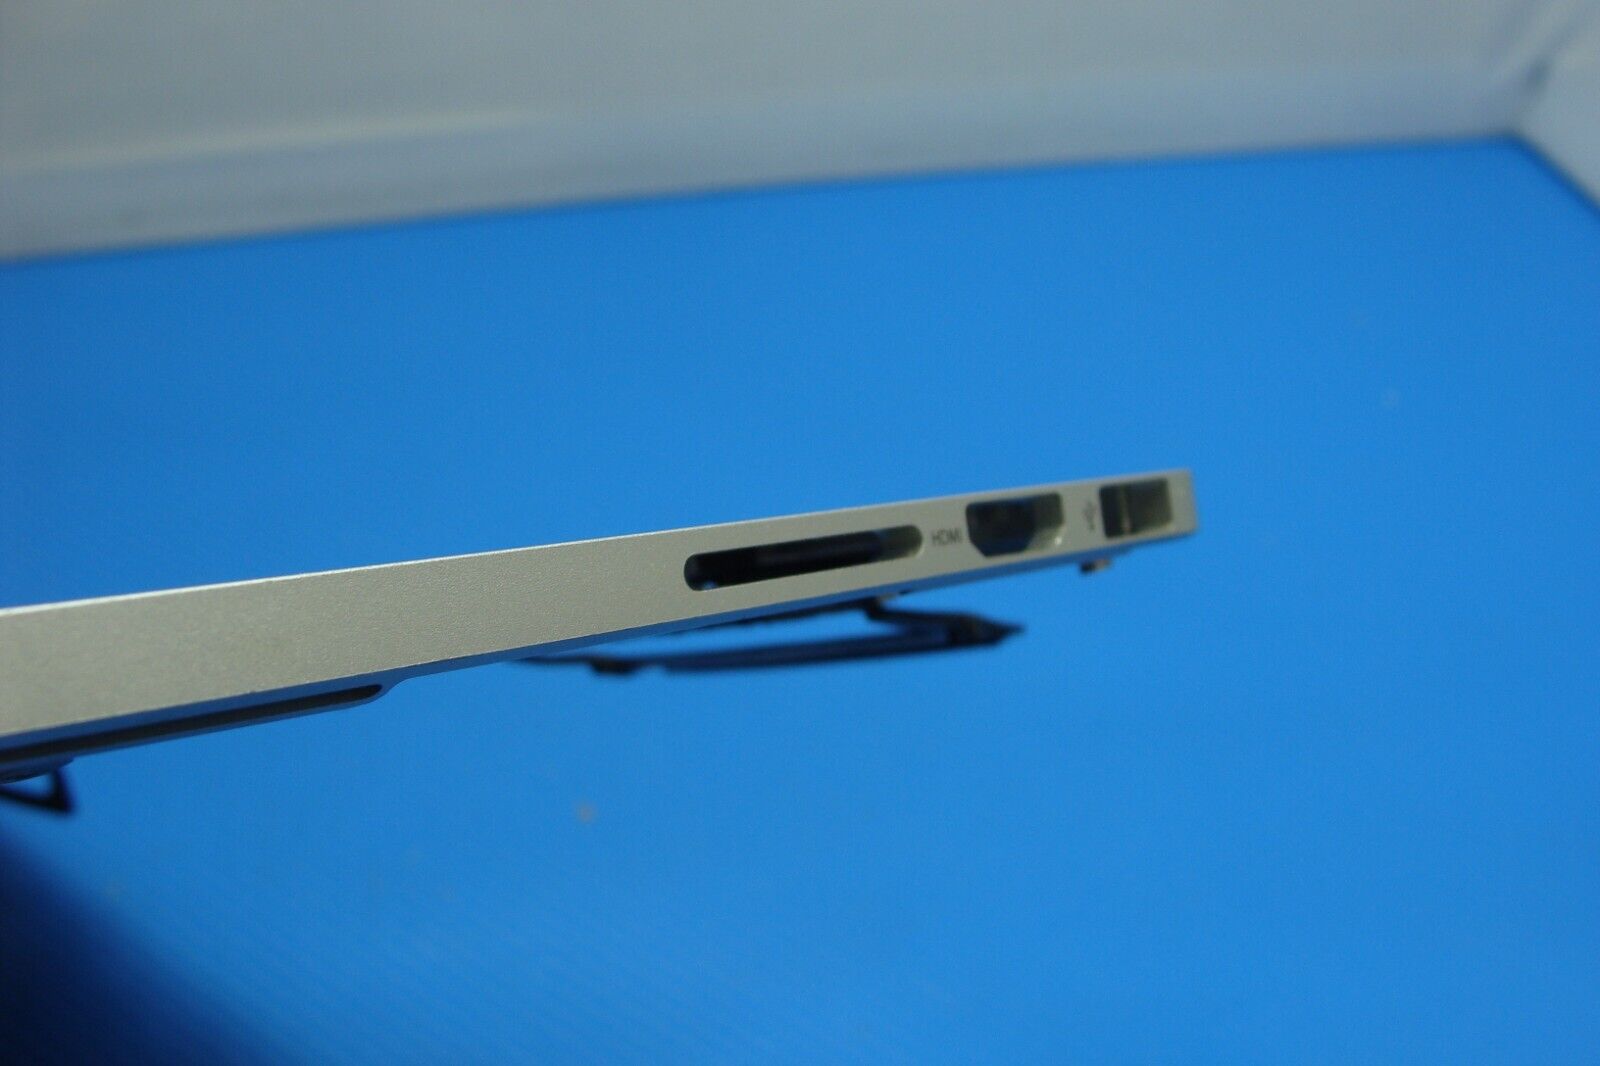 MacBook Pro ME293LL/A A1398 Late 2013 15